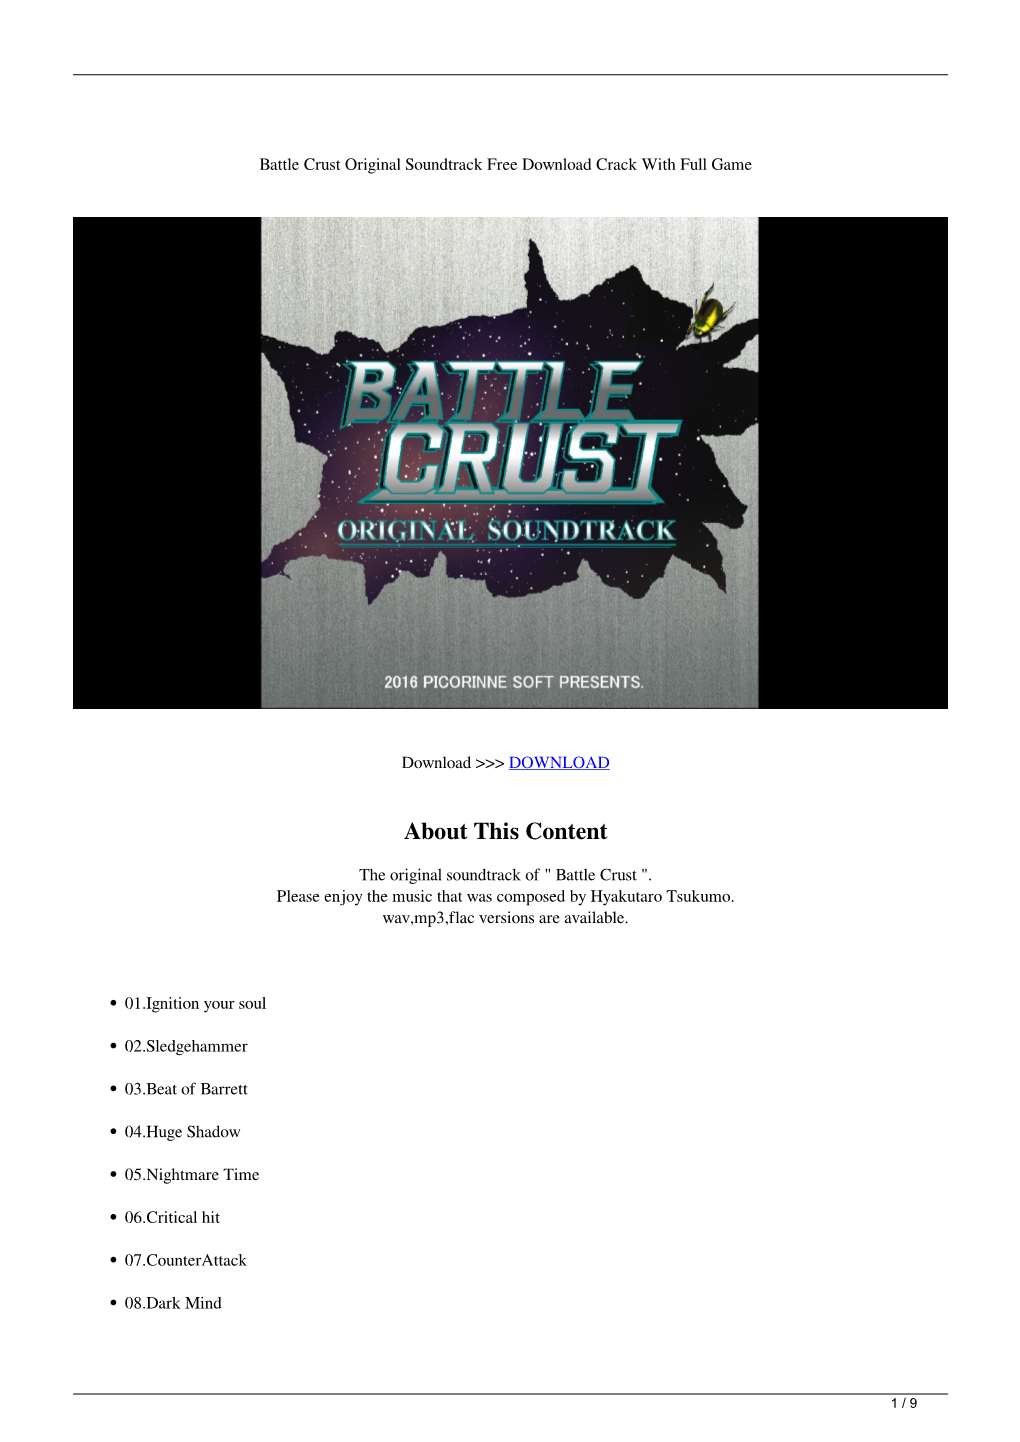 Battle Crust Original Soundtrack Free Download Crack with Full Game